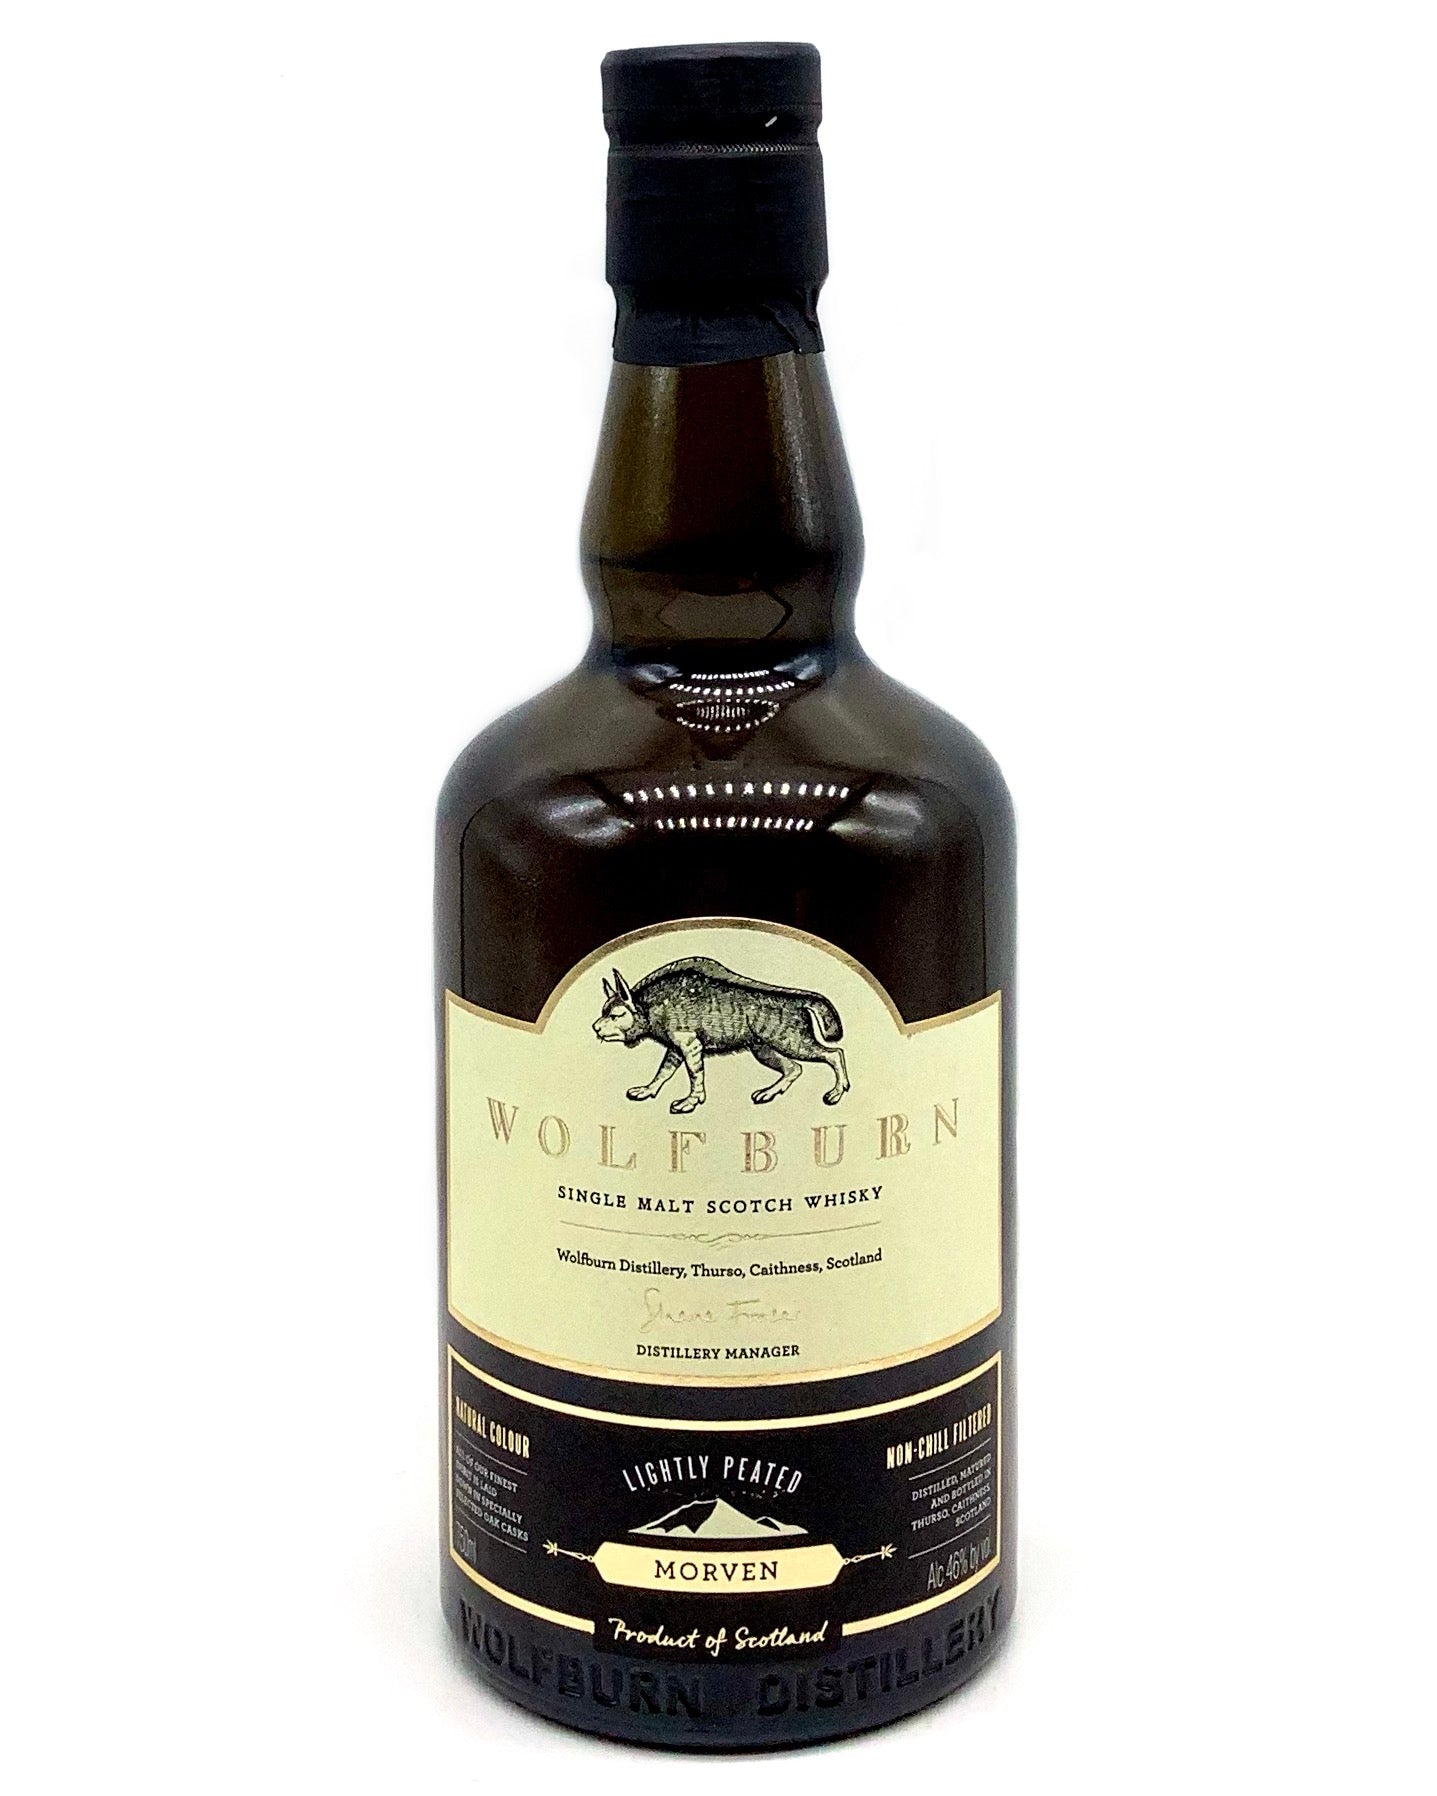 Wolfburn "Morven" Single Malt Scotch Whisky, Lightly Peated, Caithness